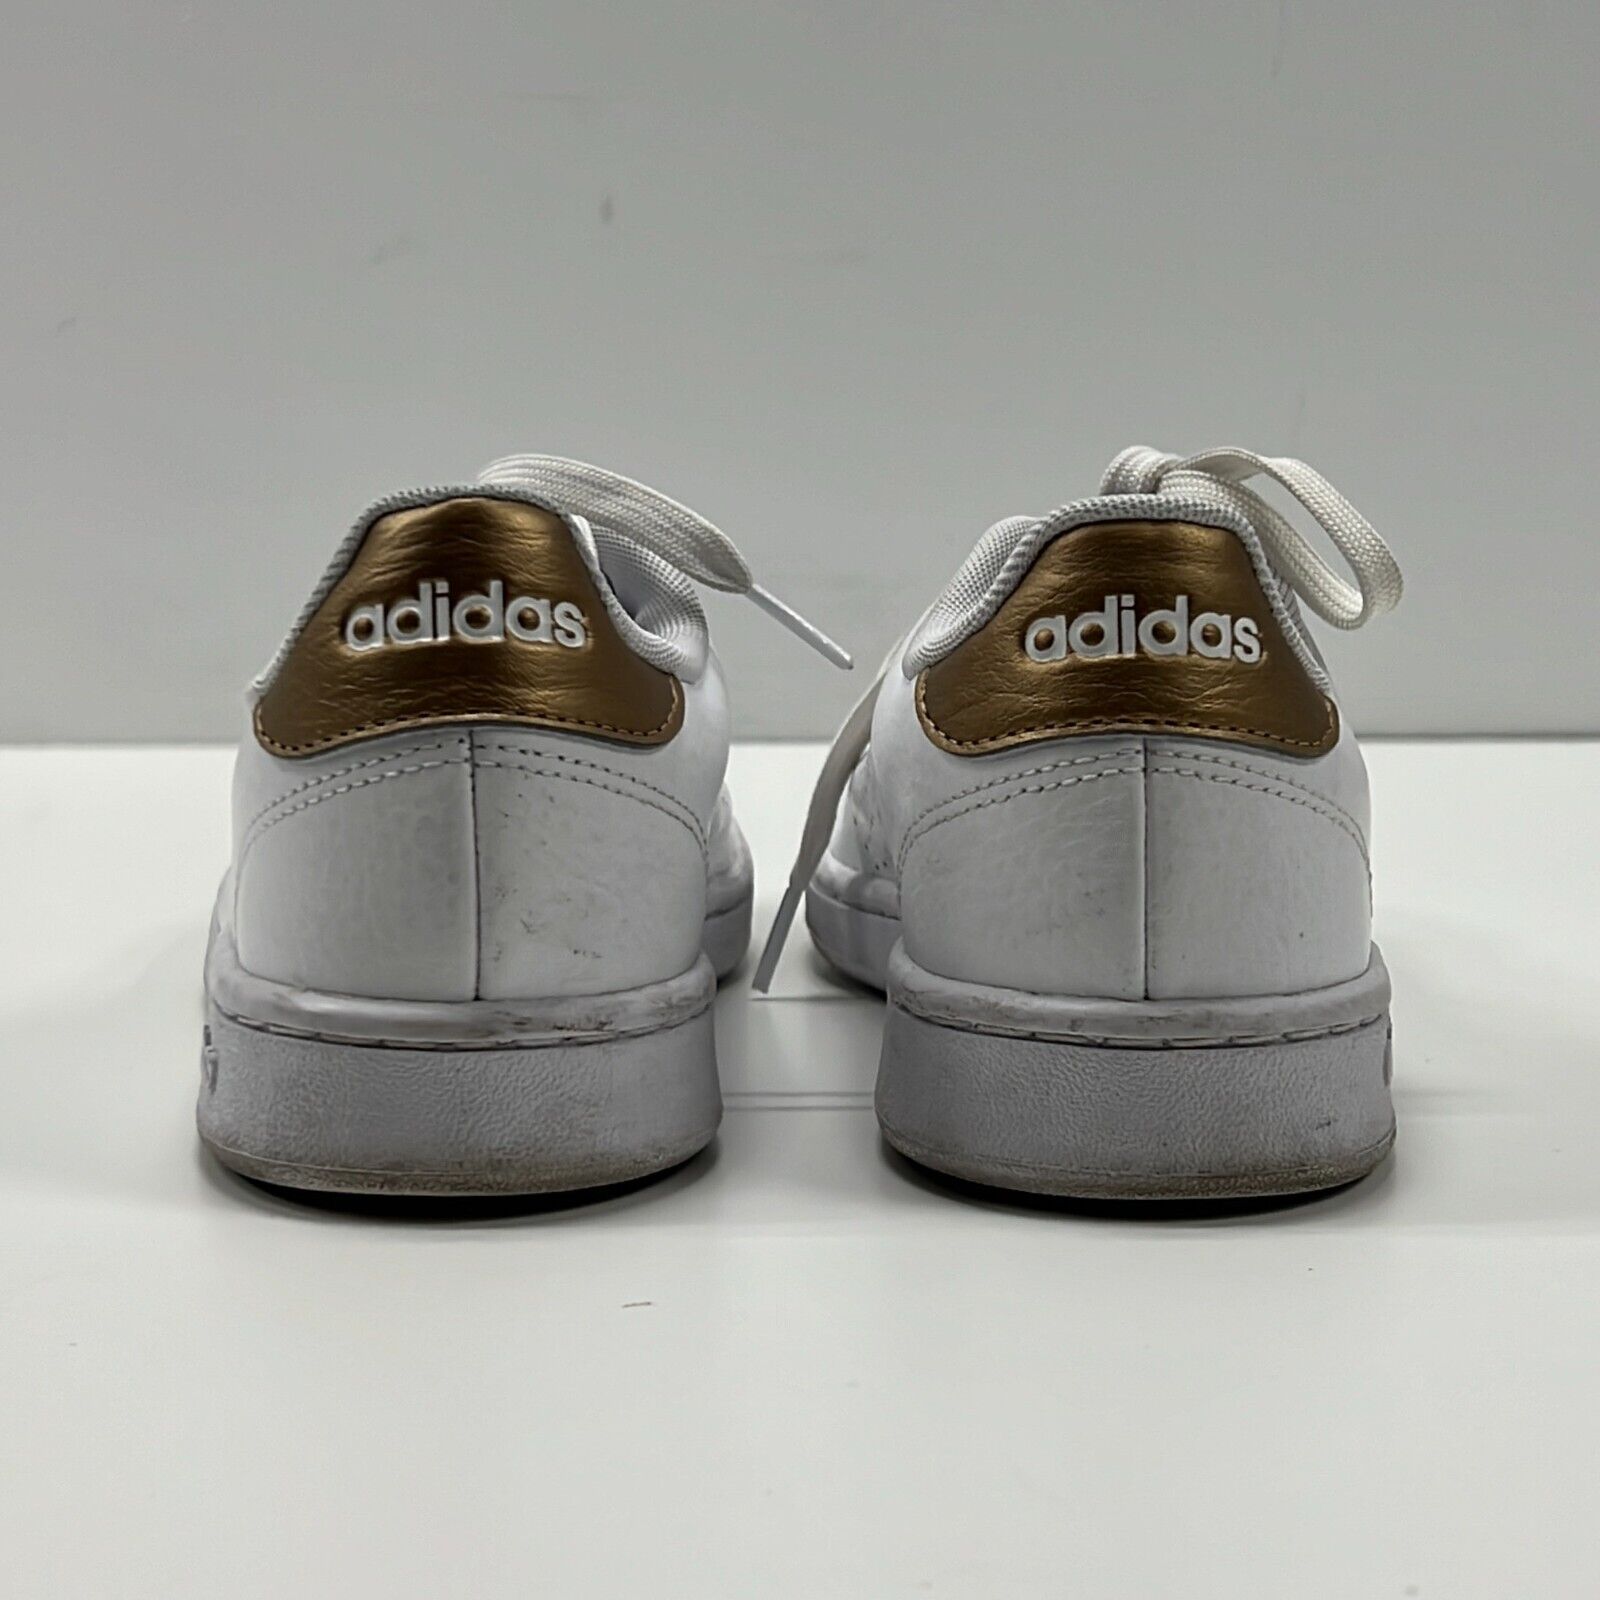 Adidas Women's Advantage F36223 White Low Top Lace-Up Sneaker Shoes Size 7.5